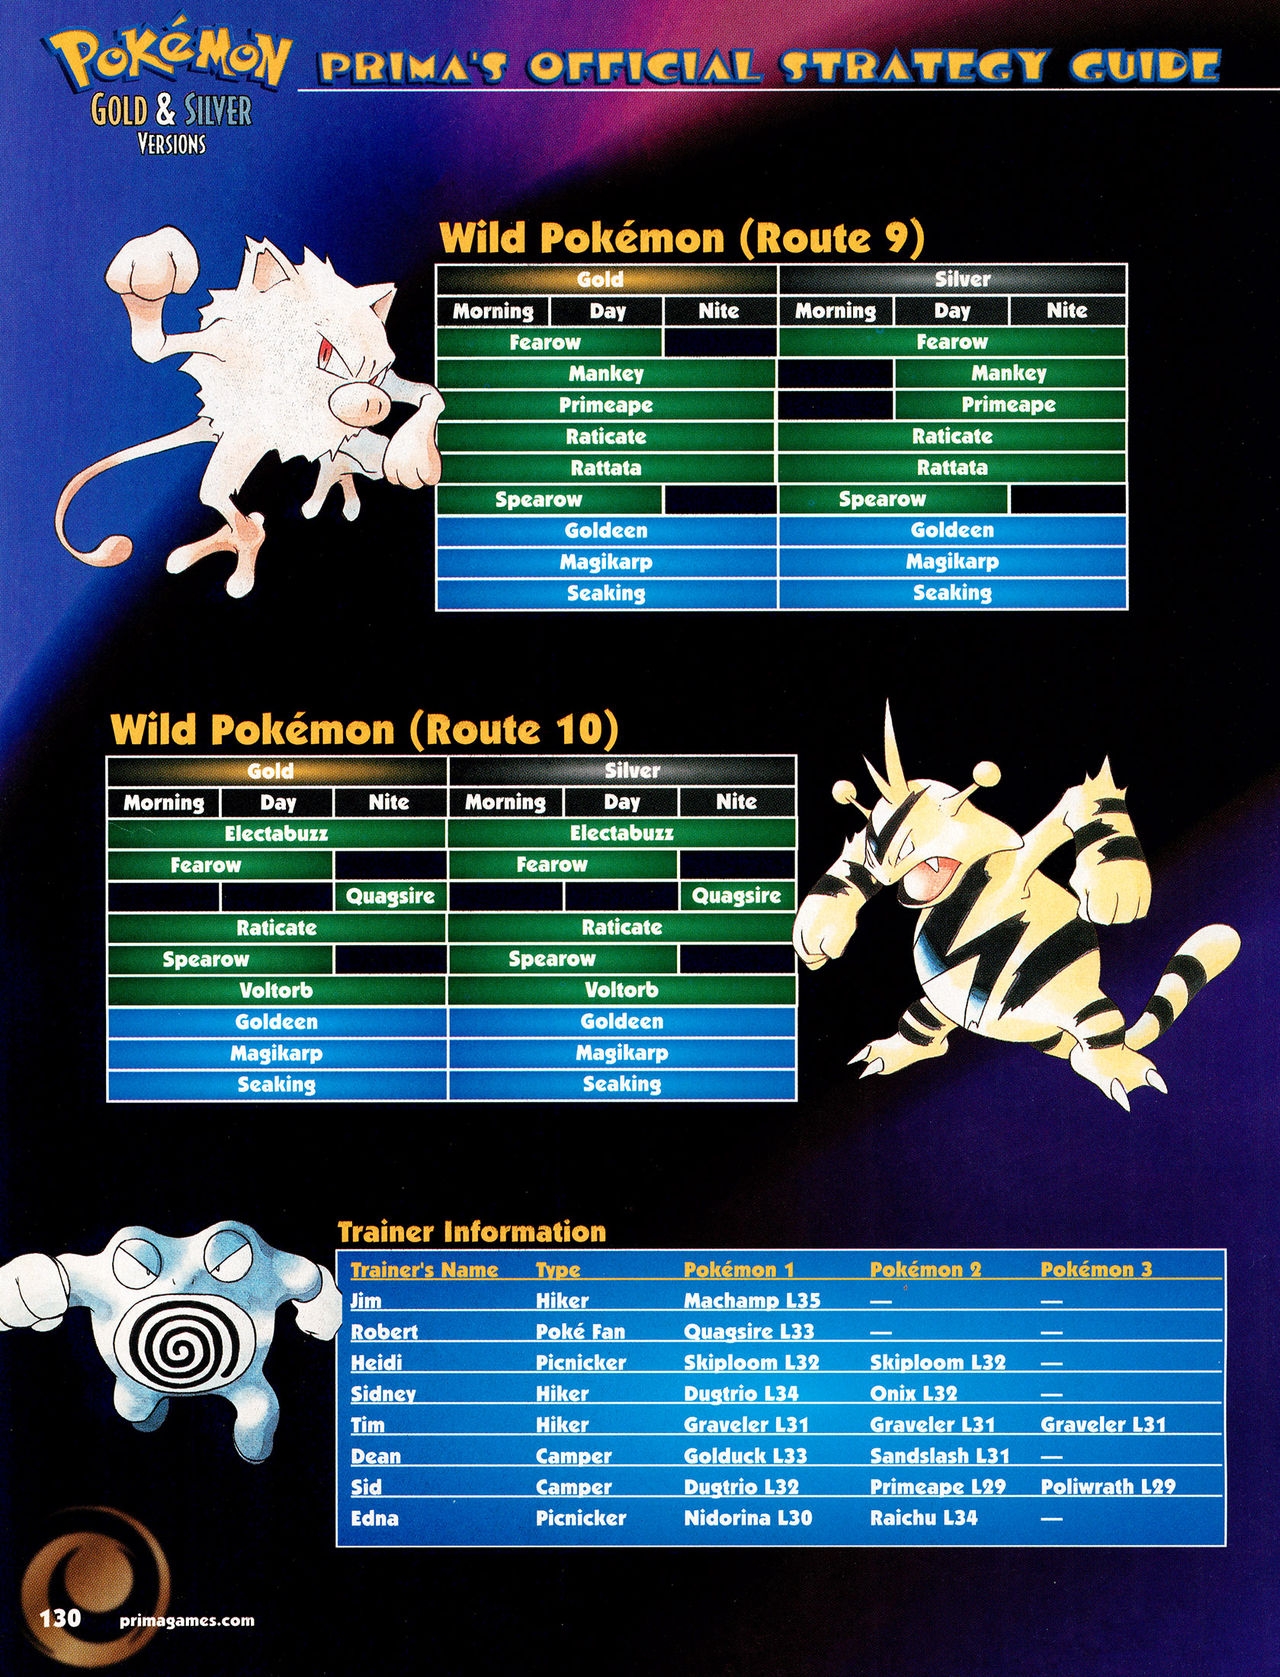 Pokémon Gold & Silver Versions - Strategy Guide 131